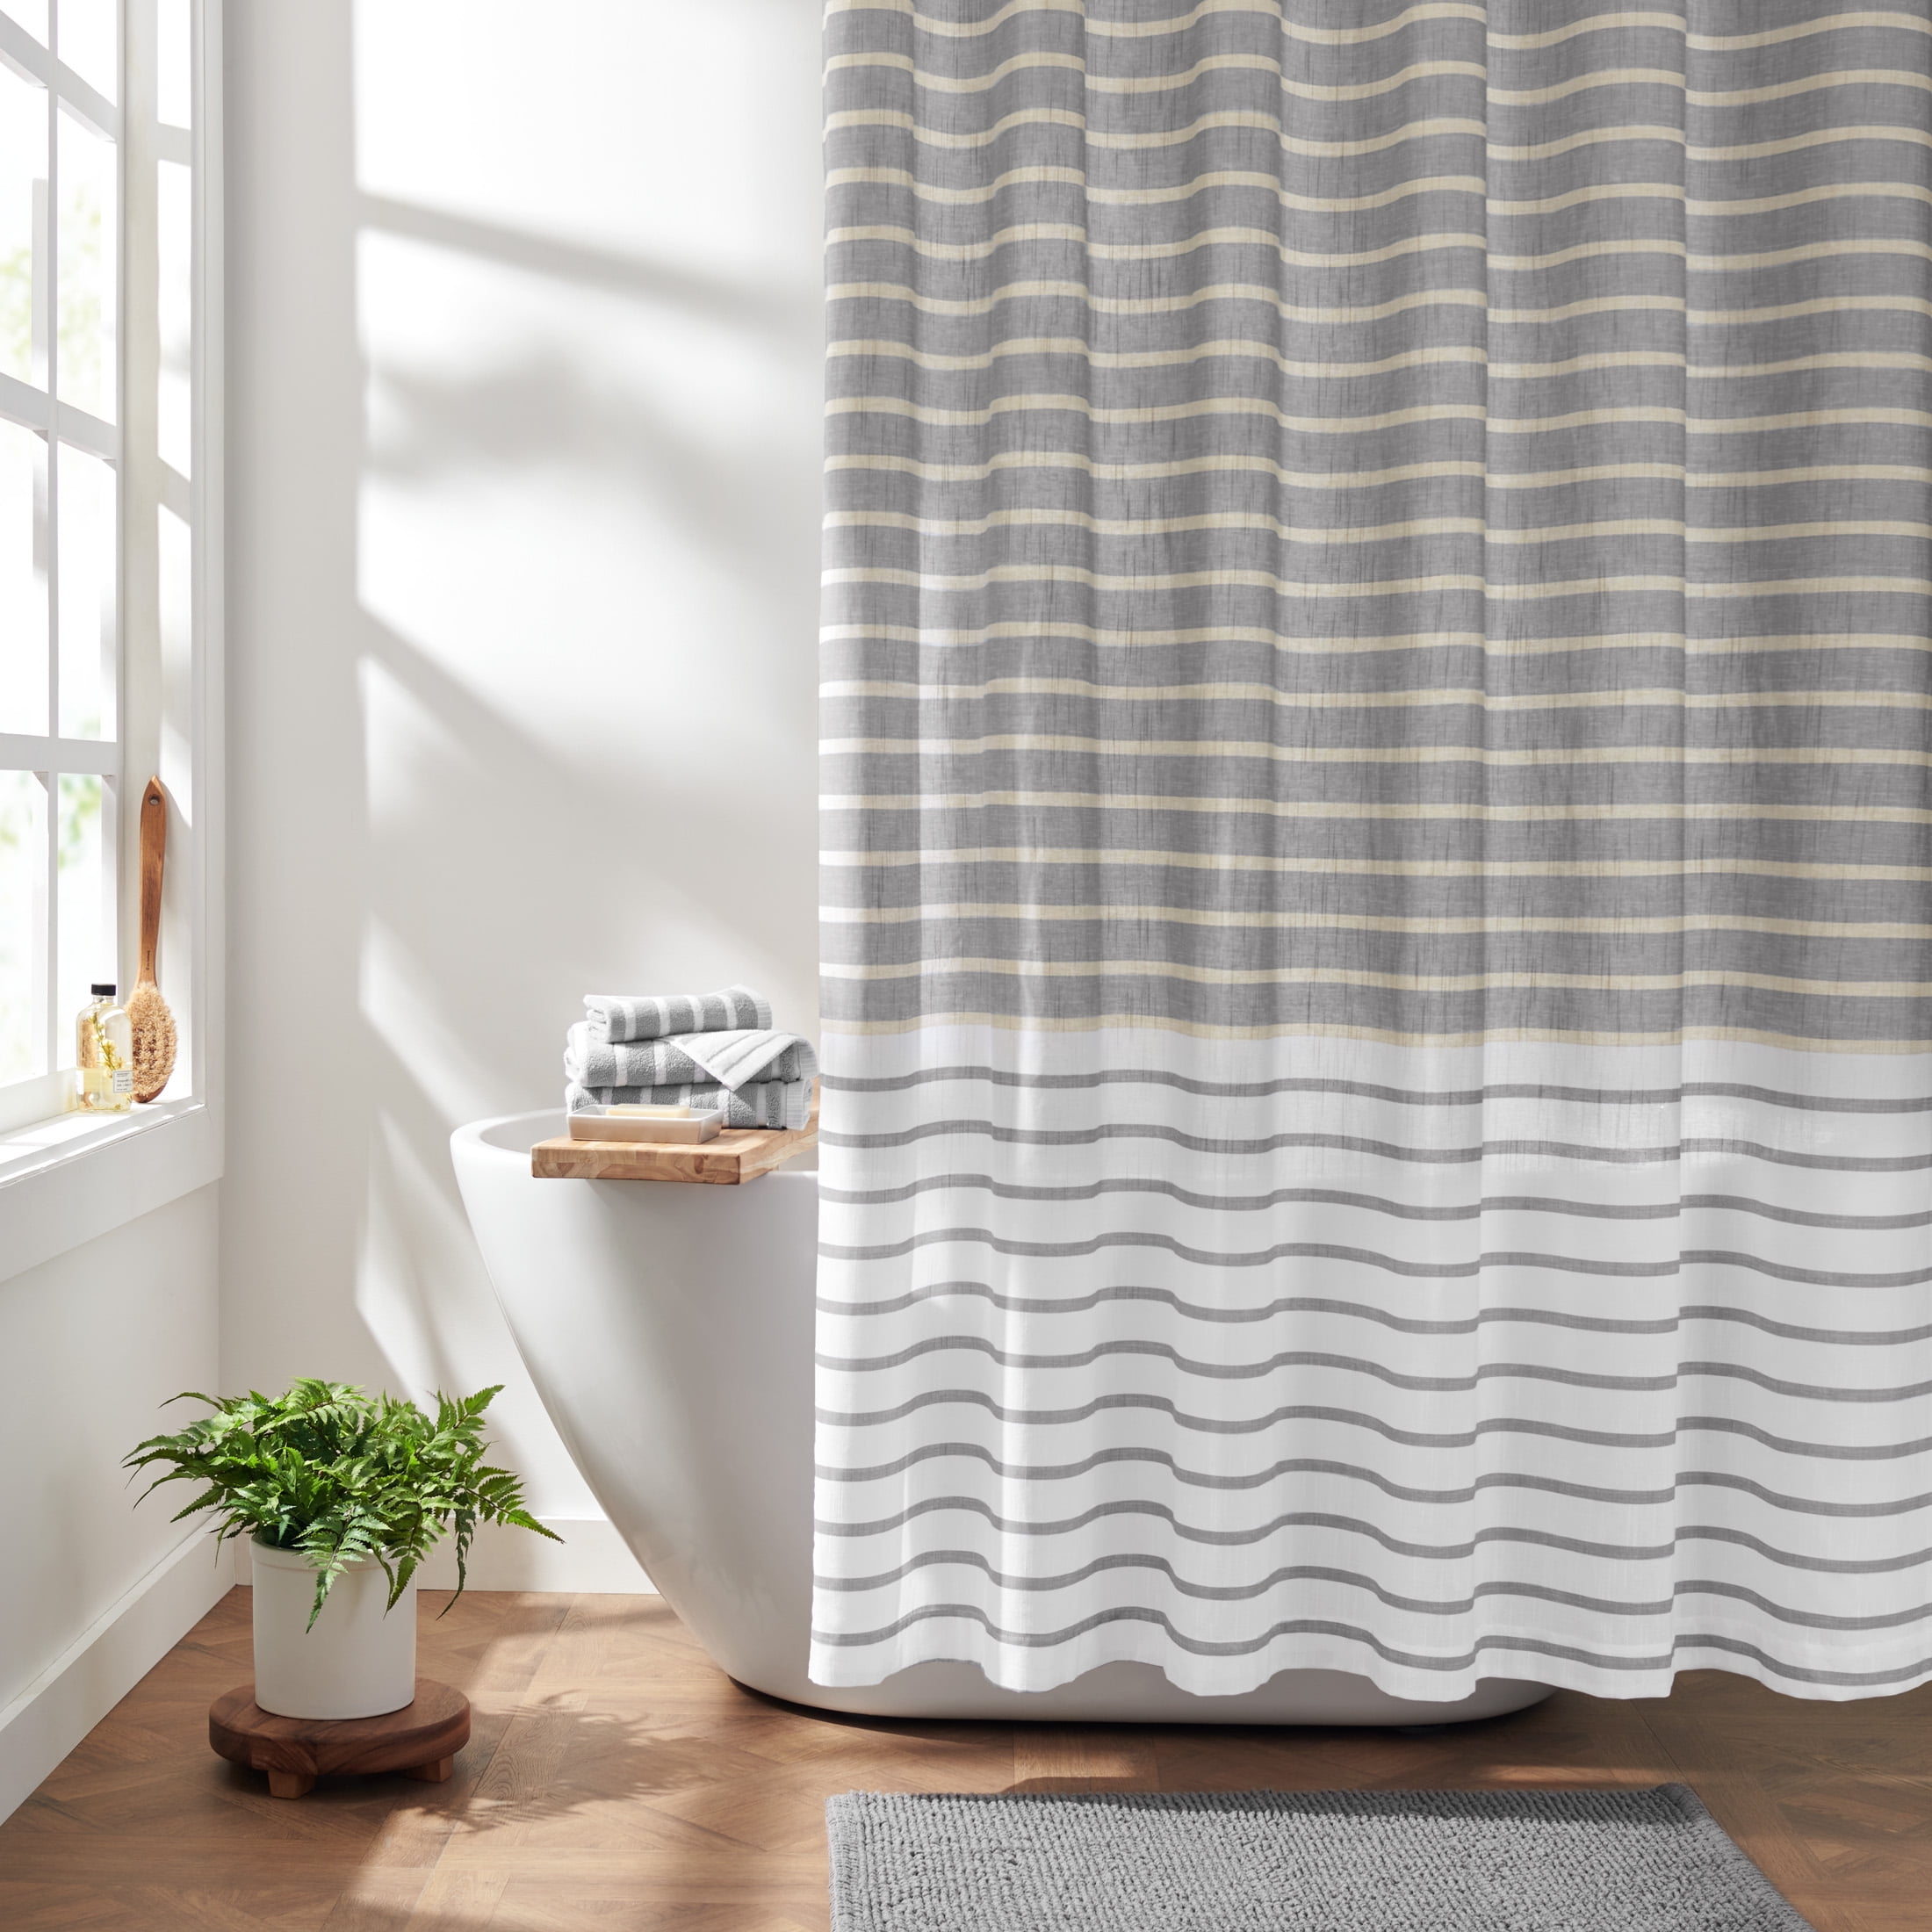 American Cowboy Equipment Shower Curtain Liner Bathroom Waterproof Fabric Mat 